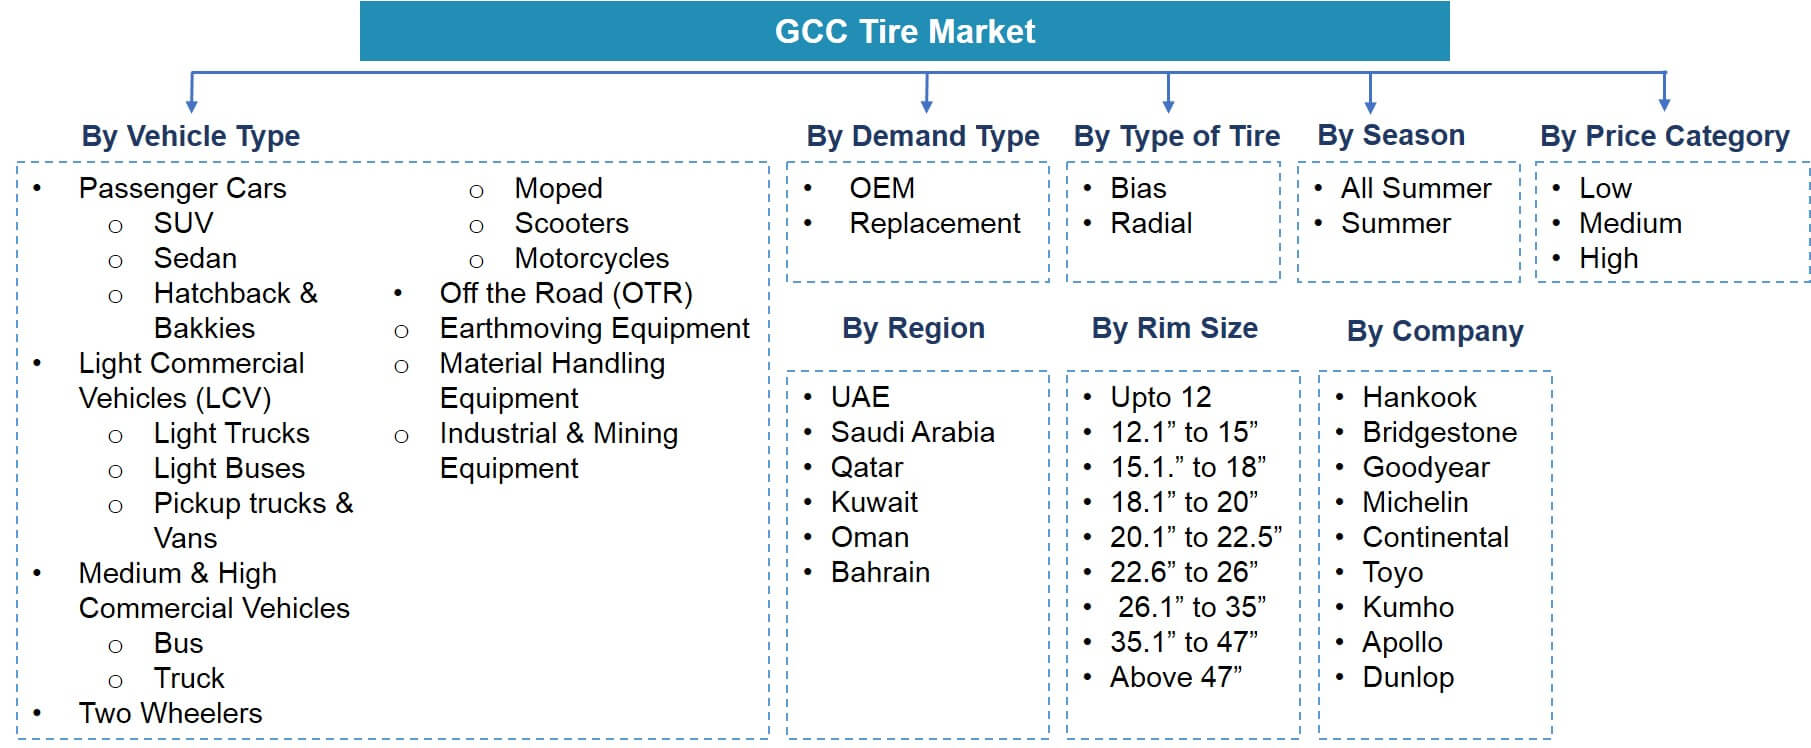 GCC Tire Market Analysis